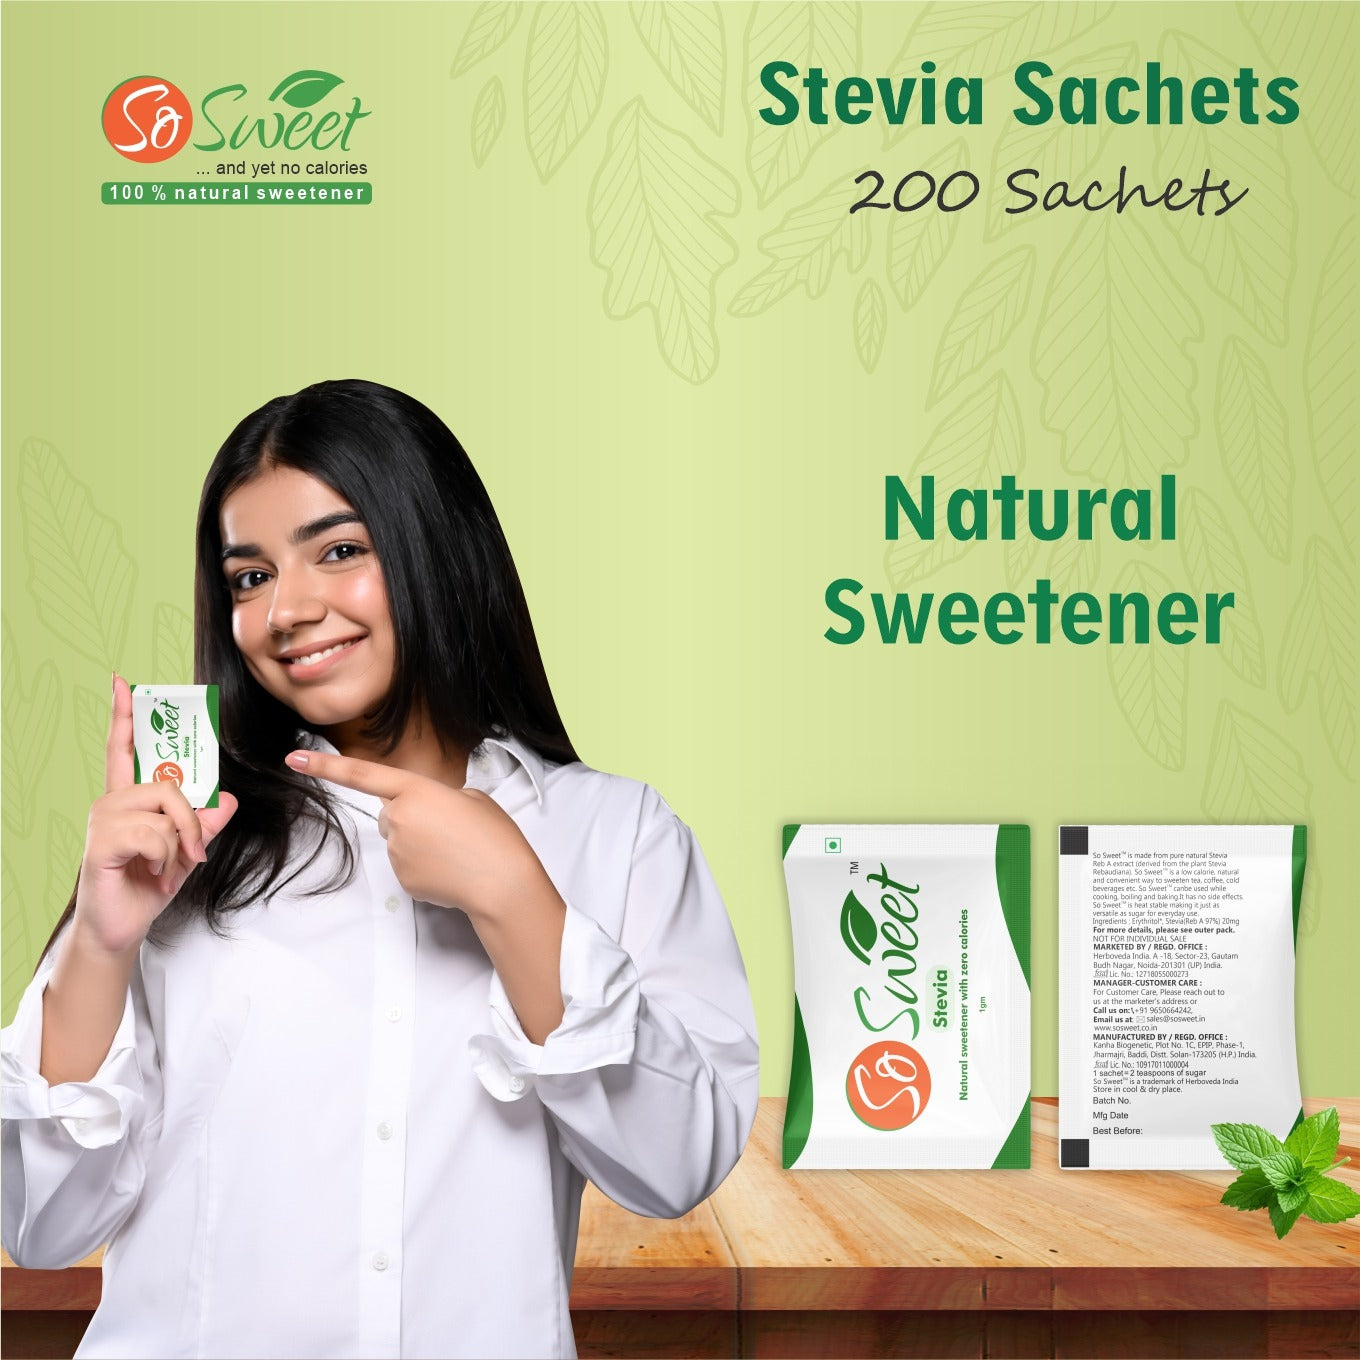 So Sweet Stevia Sachets Sugar Free Natural Low Calorie Sweetener -200 Sachets